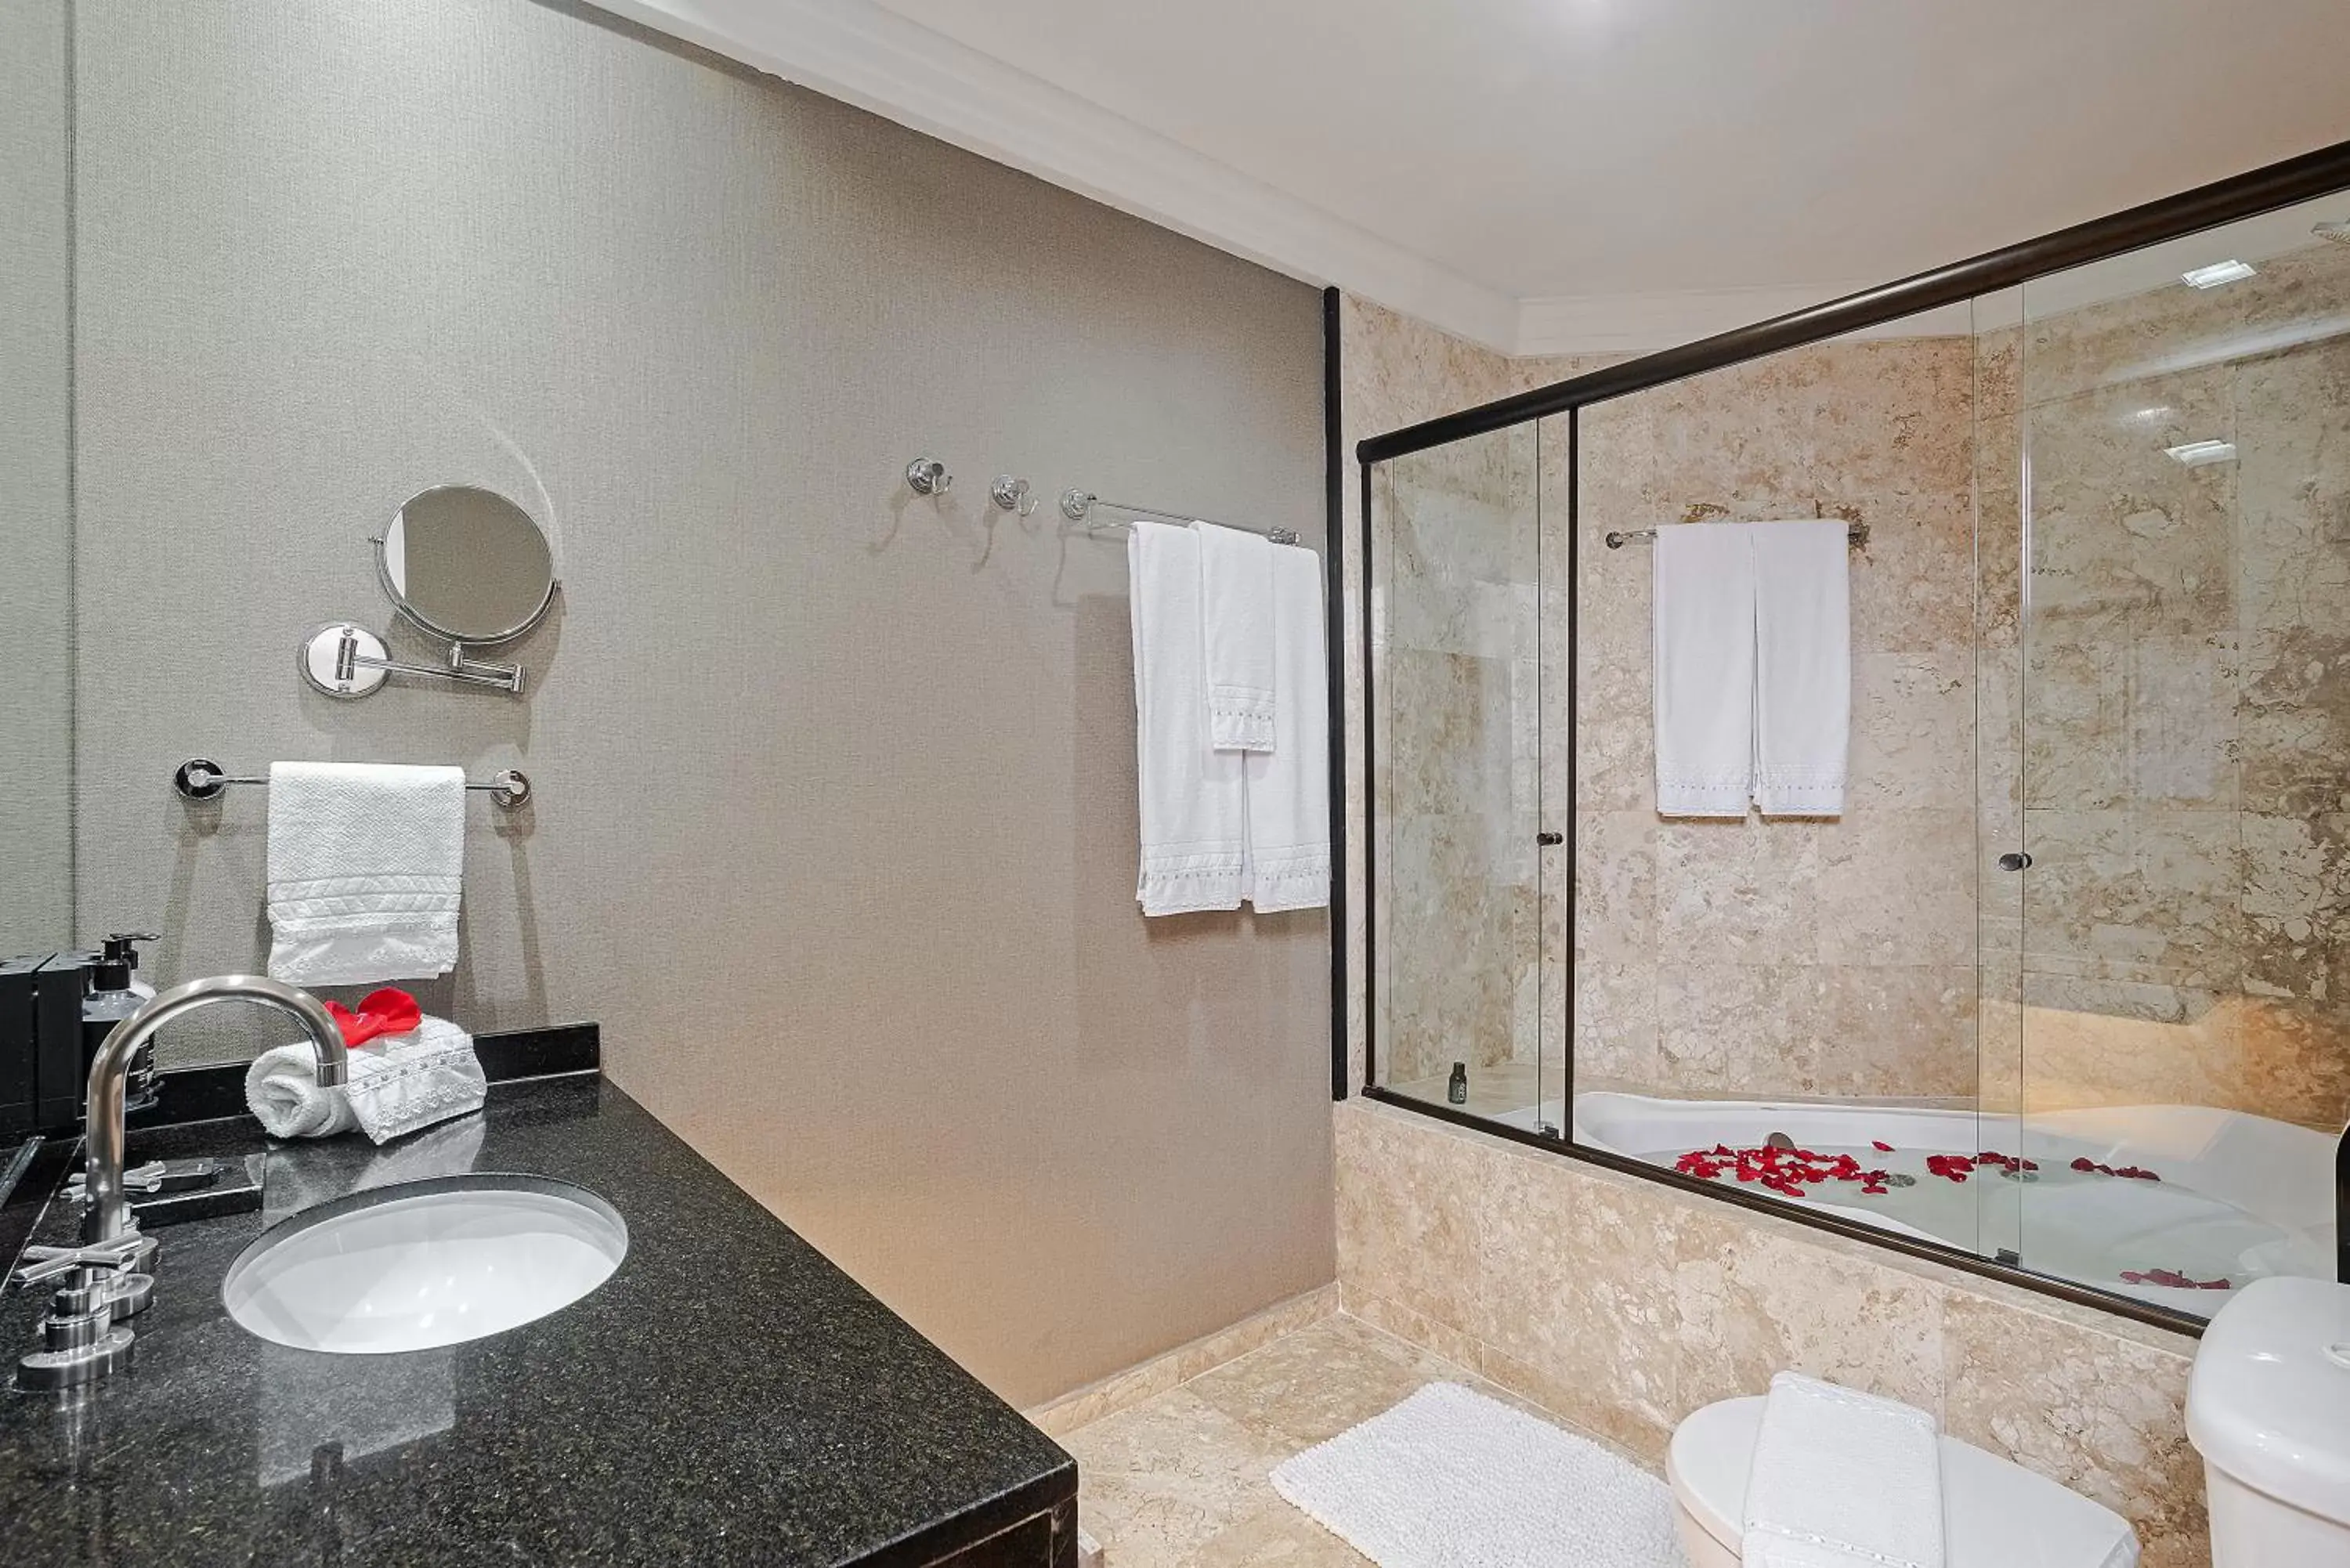 Area and facilities, Bathroom in FULL JAZZ by Slaviero Hotéis